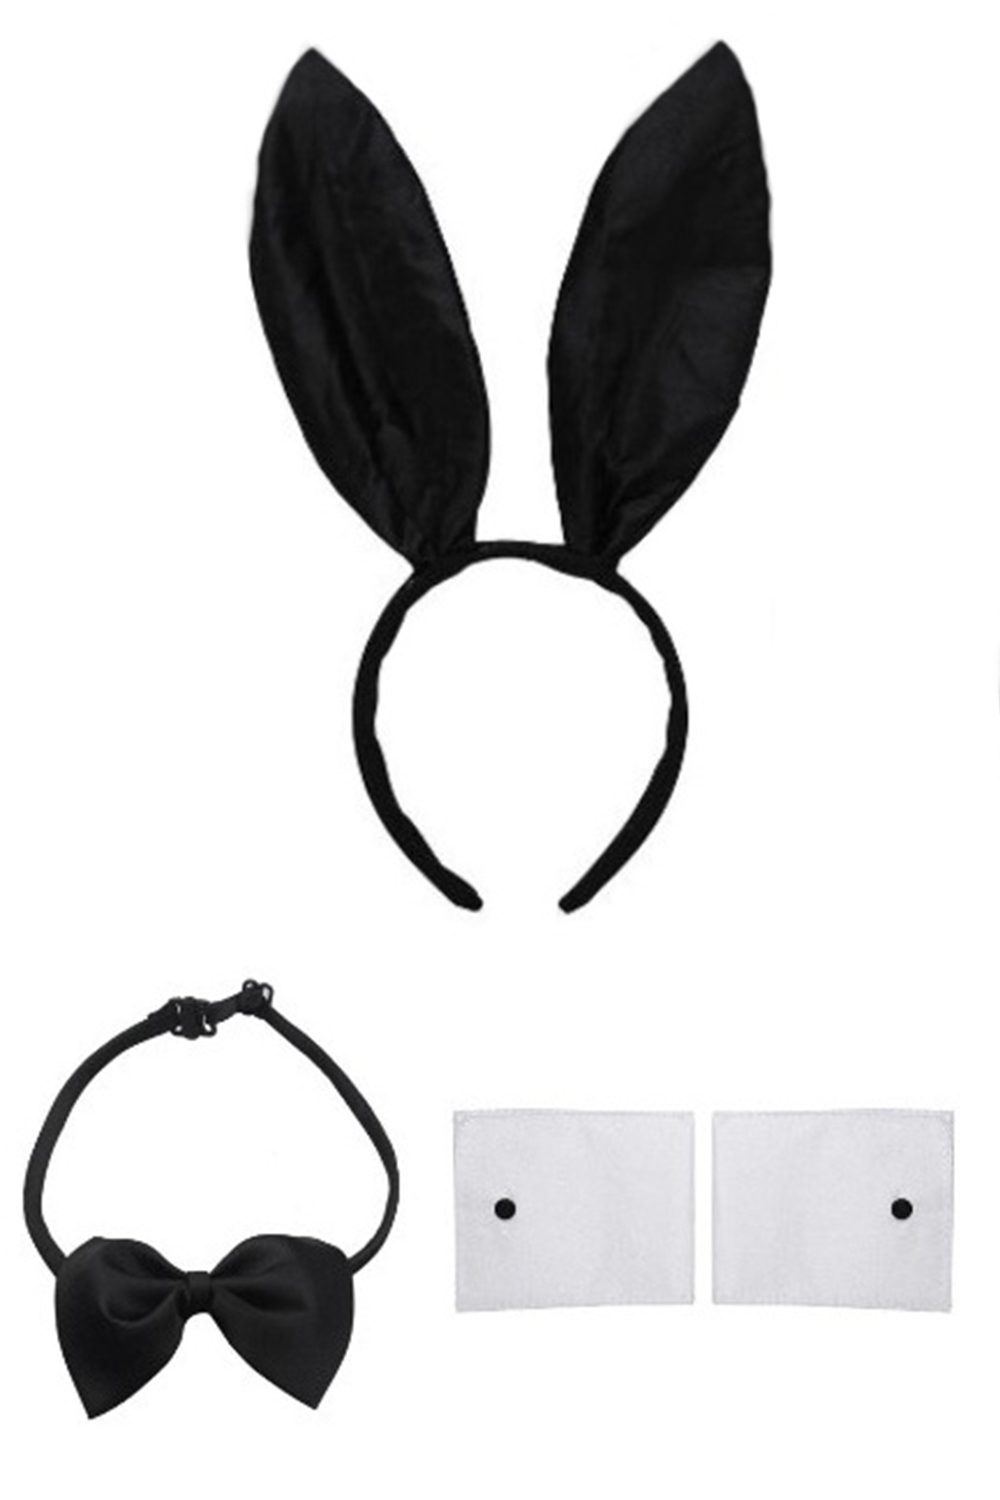 Bunny Accessories – Ears, Collar, Cuffs